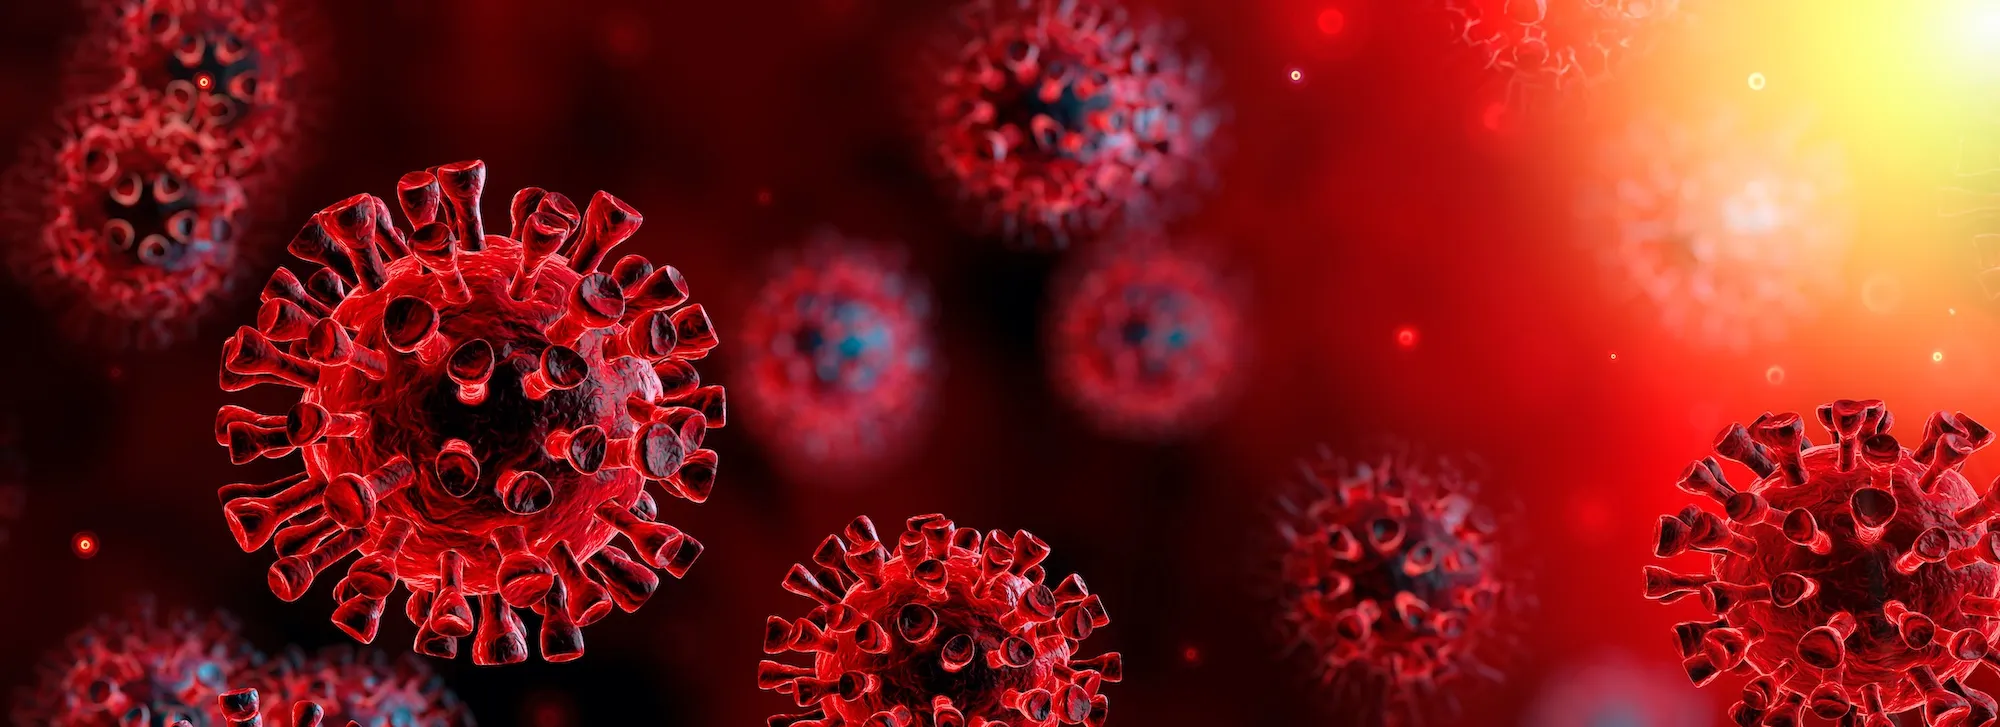 Coronavirus India Updates: Growing concerns over second wave of coronavirus in India prompted states like Maharashtra to consider lockdown. 